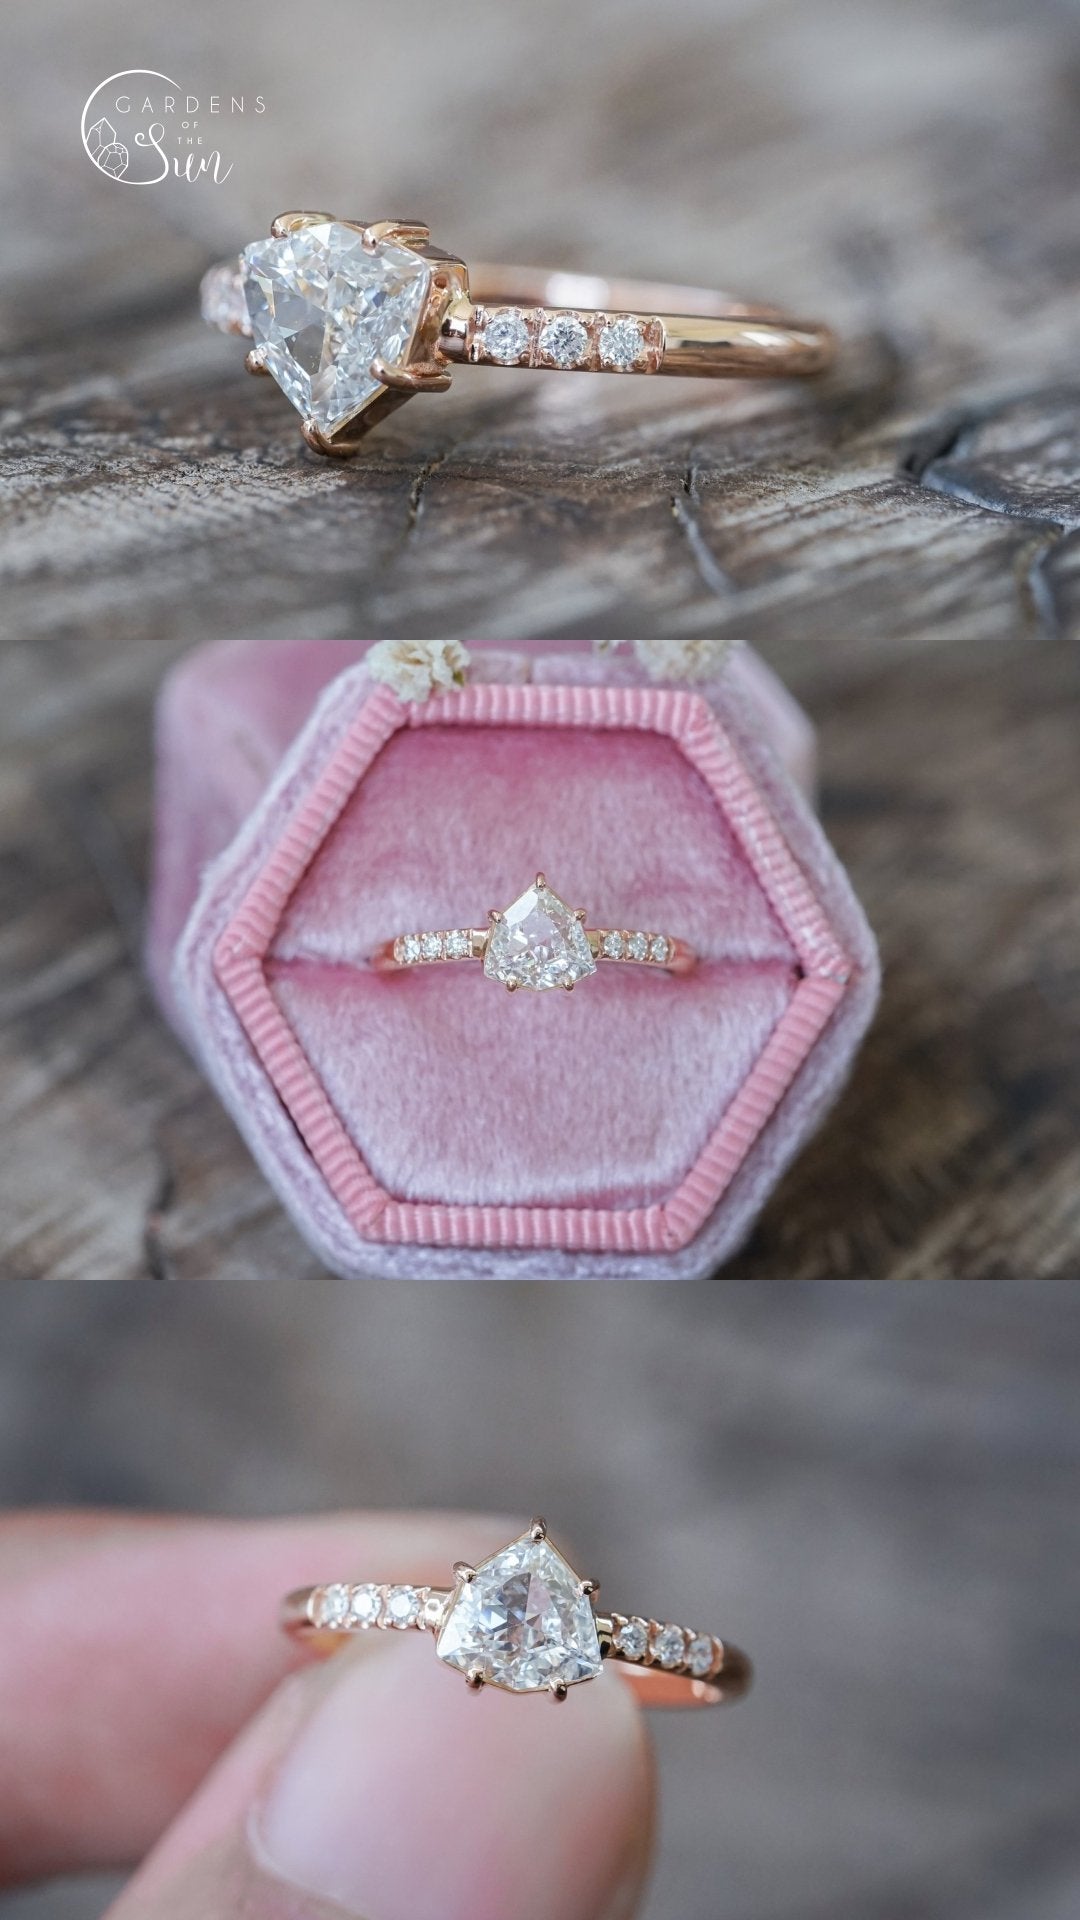 Pink Radiant cut Diamond Necklace - 6.33 carat